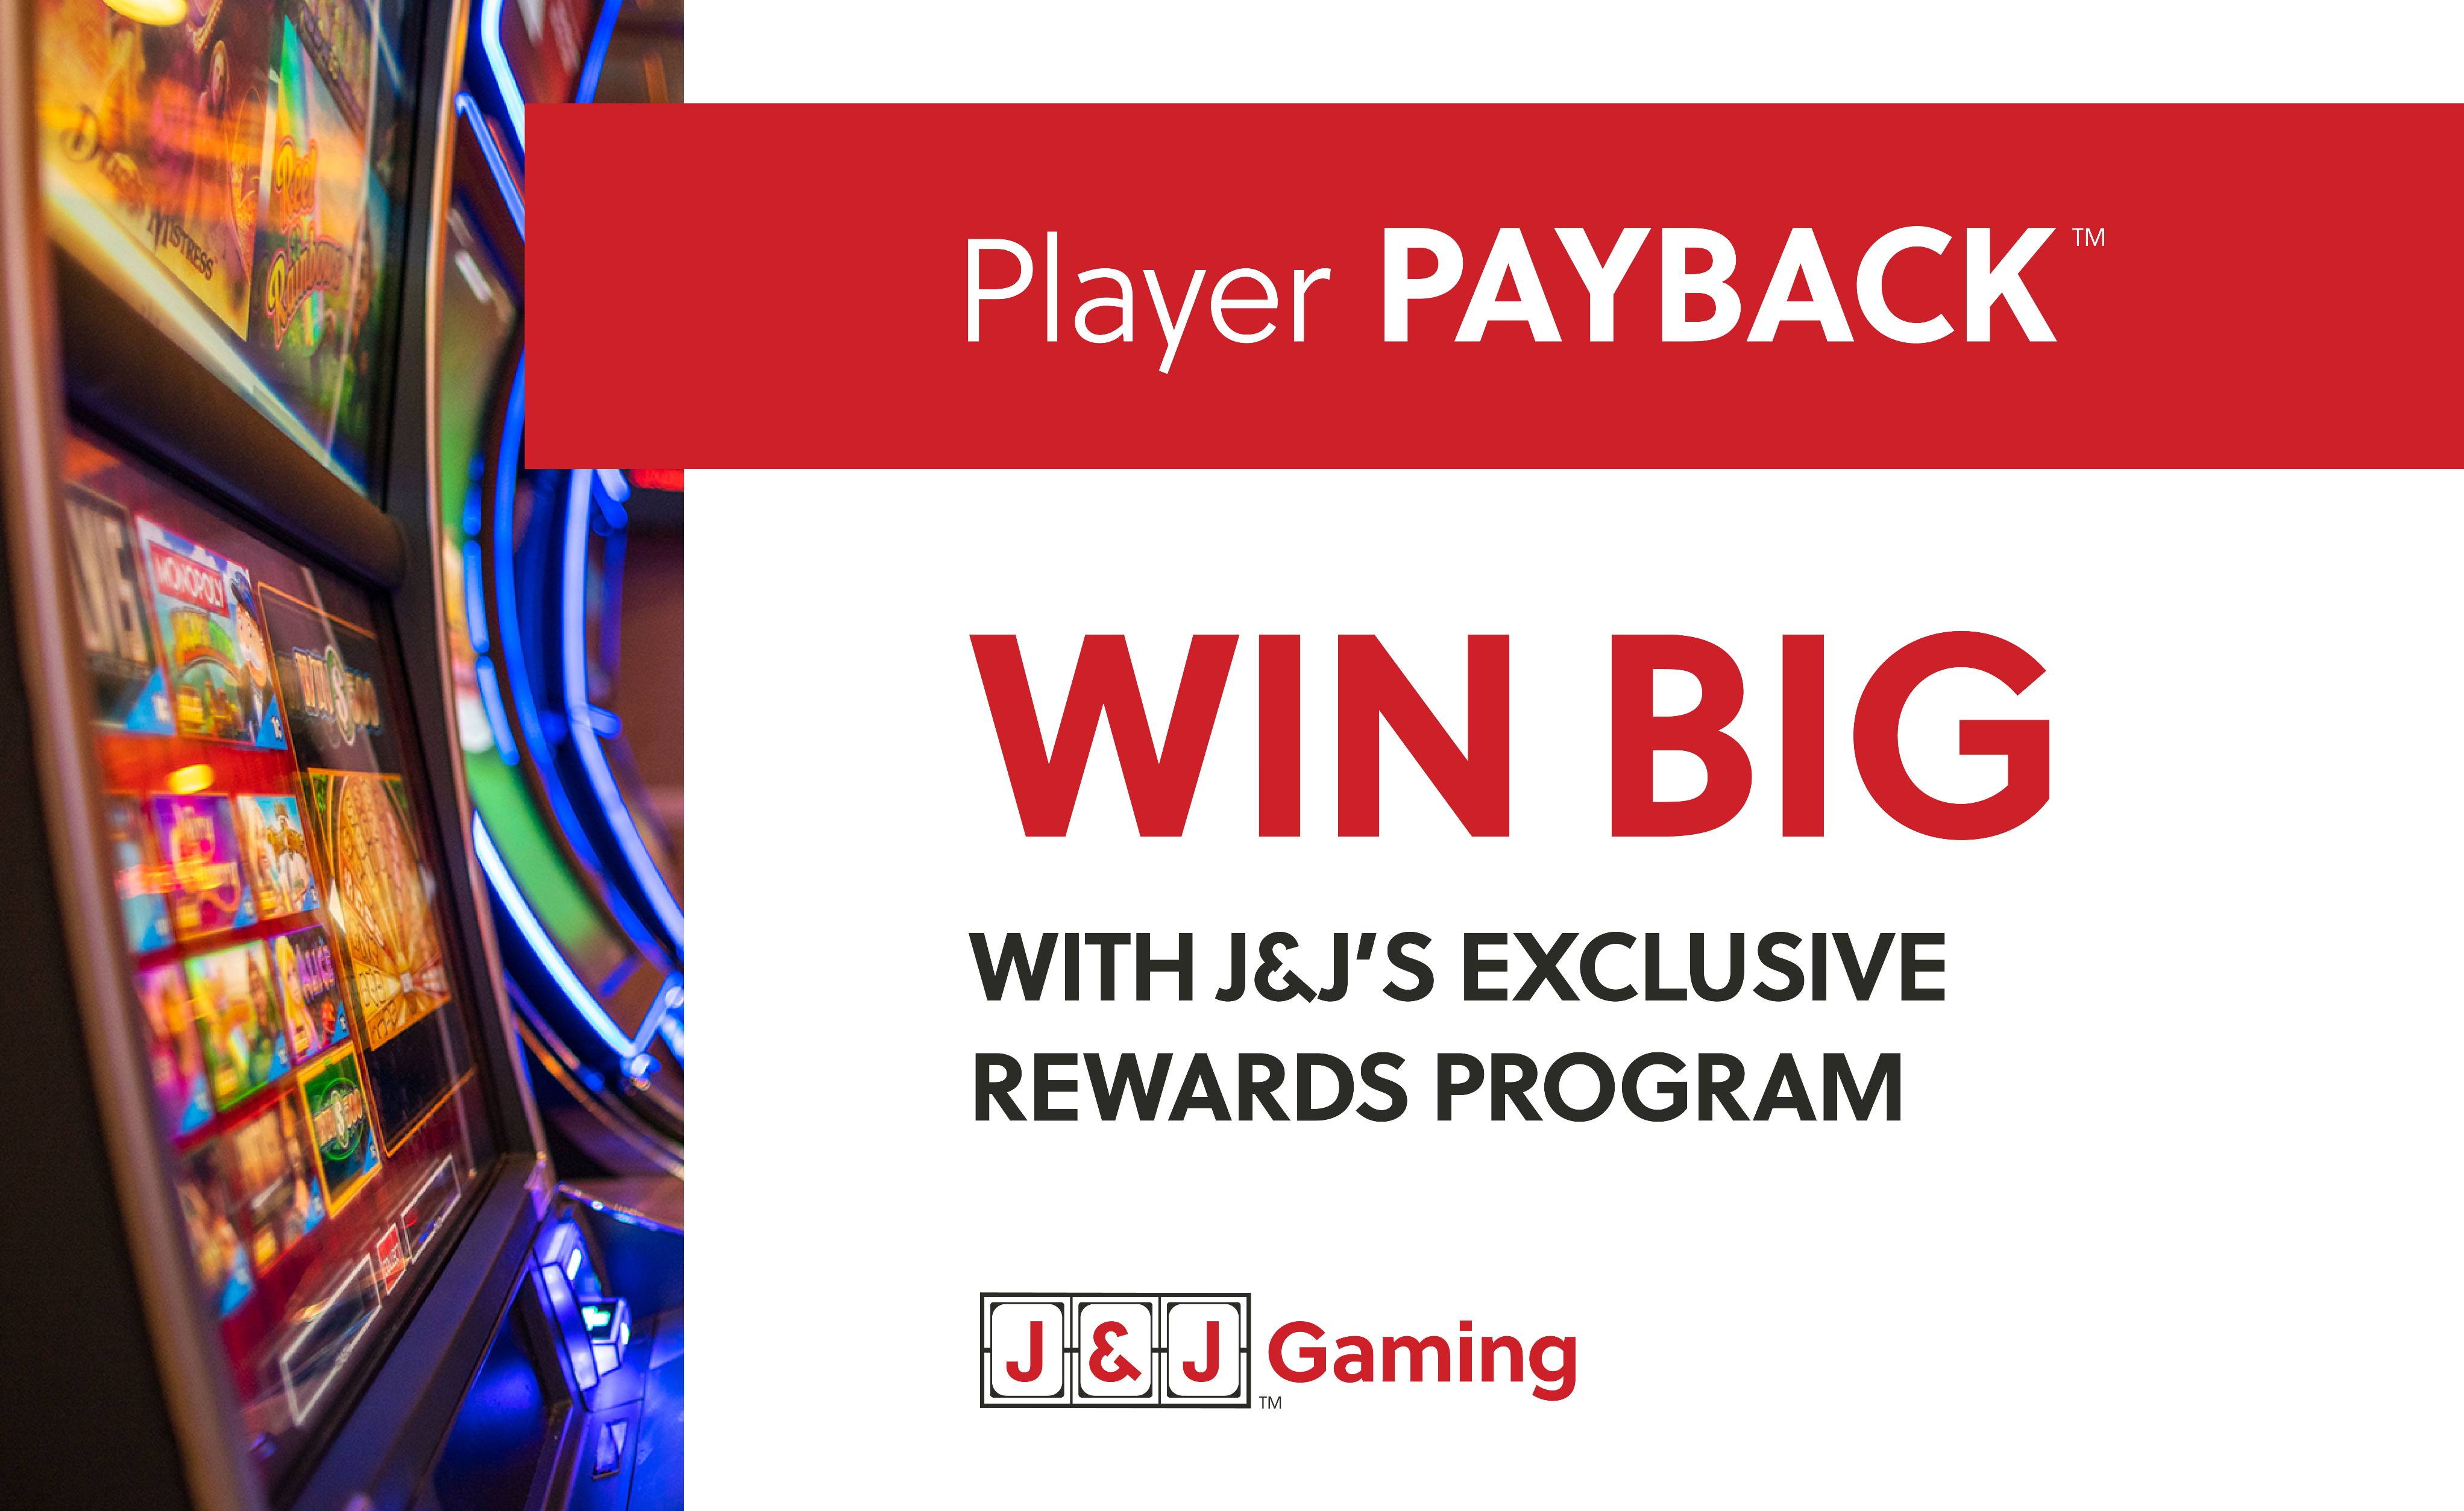 J&J Gaming launches player payback rewards program